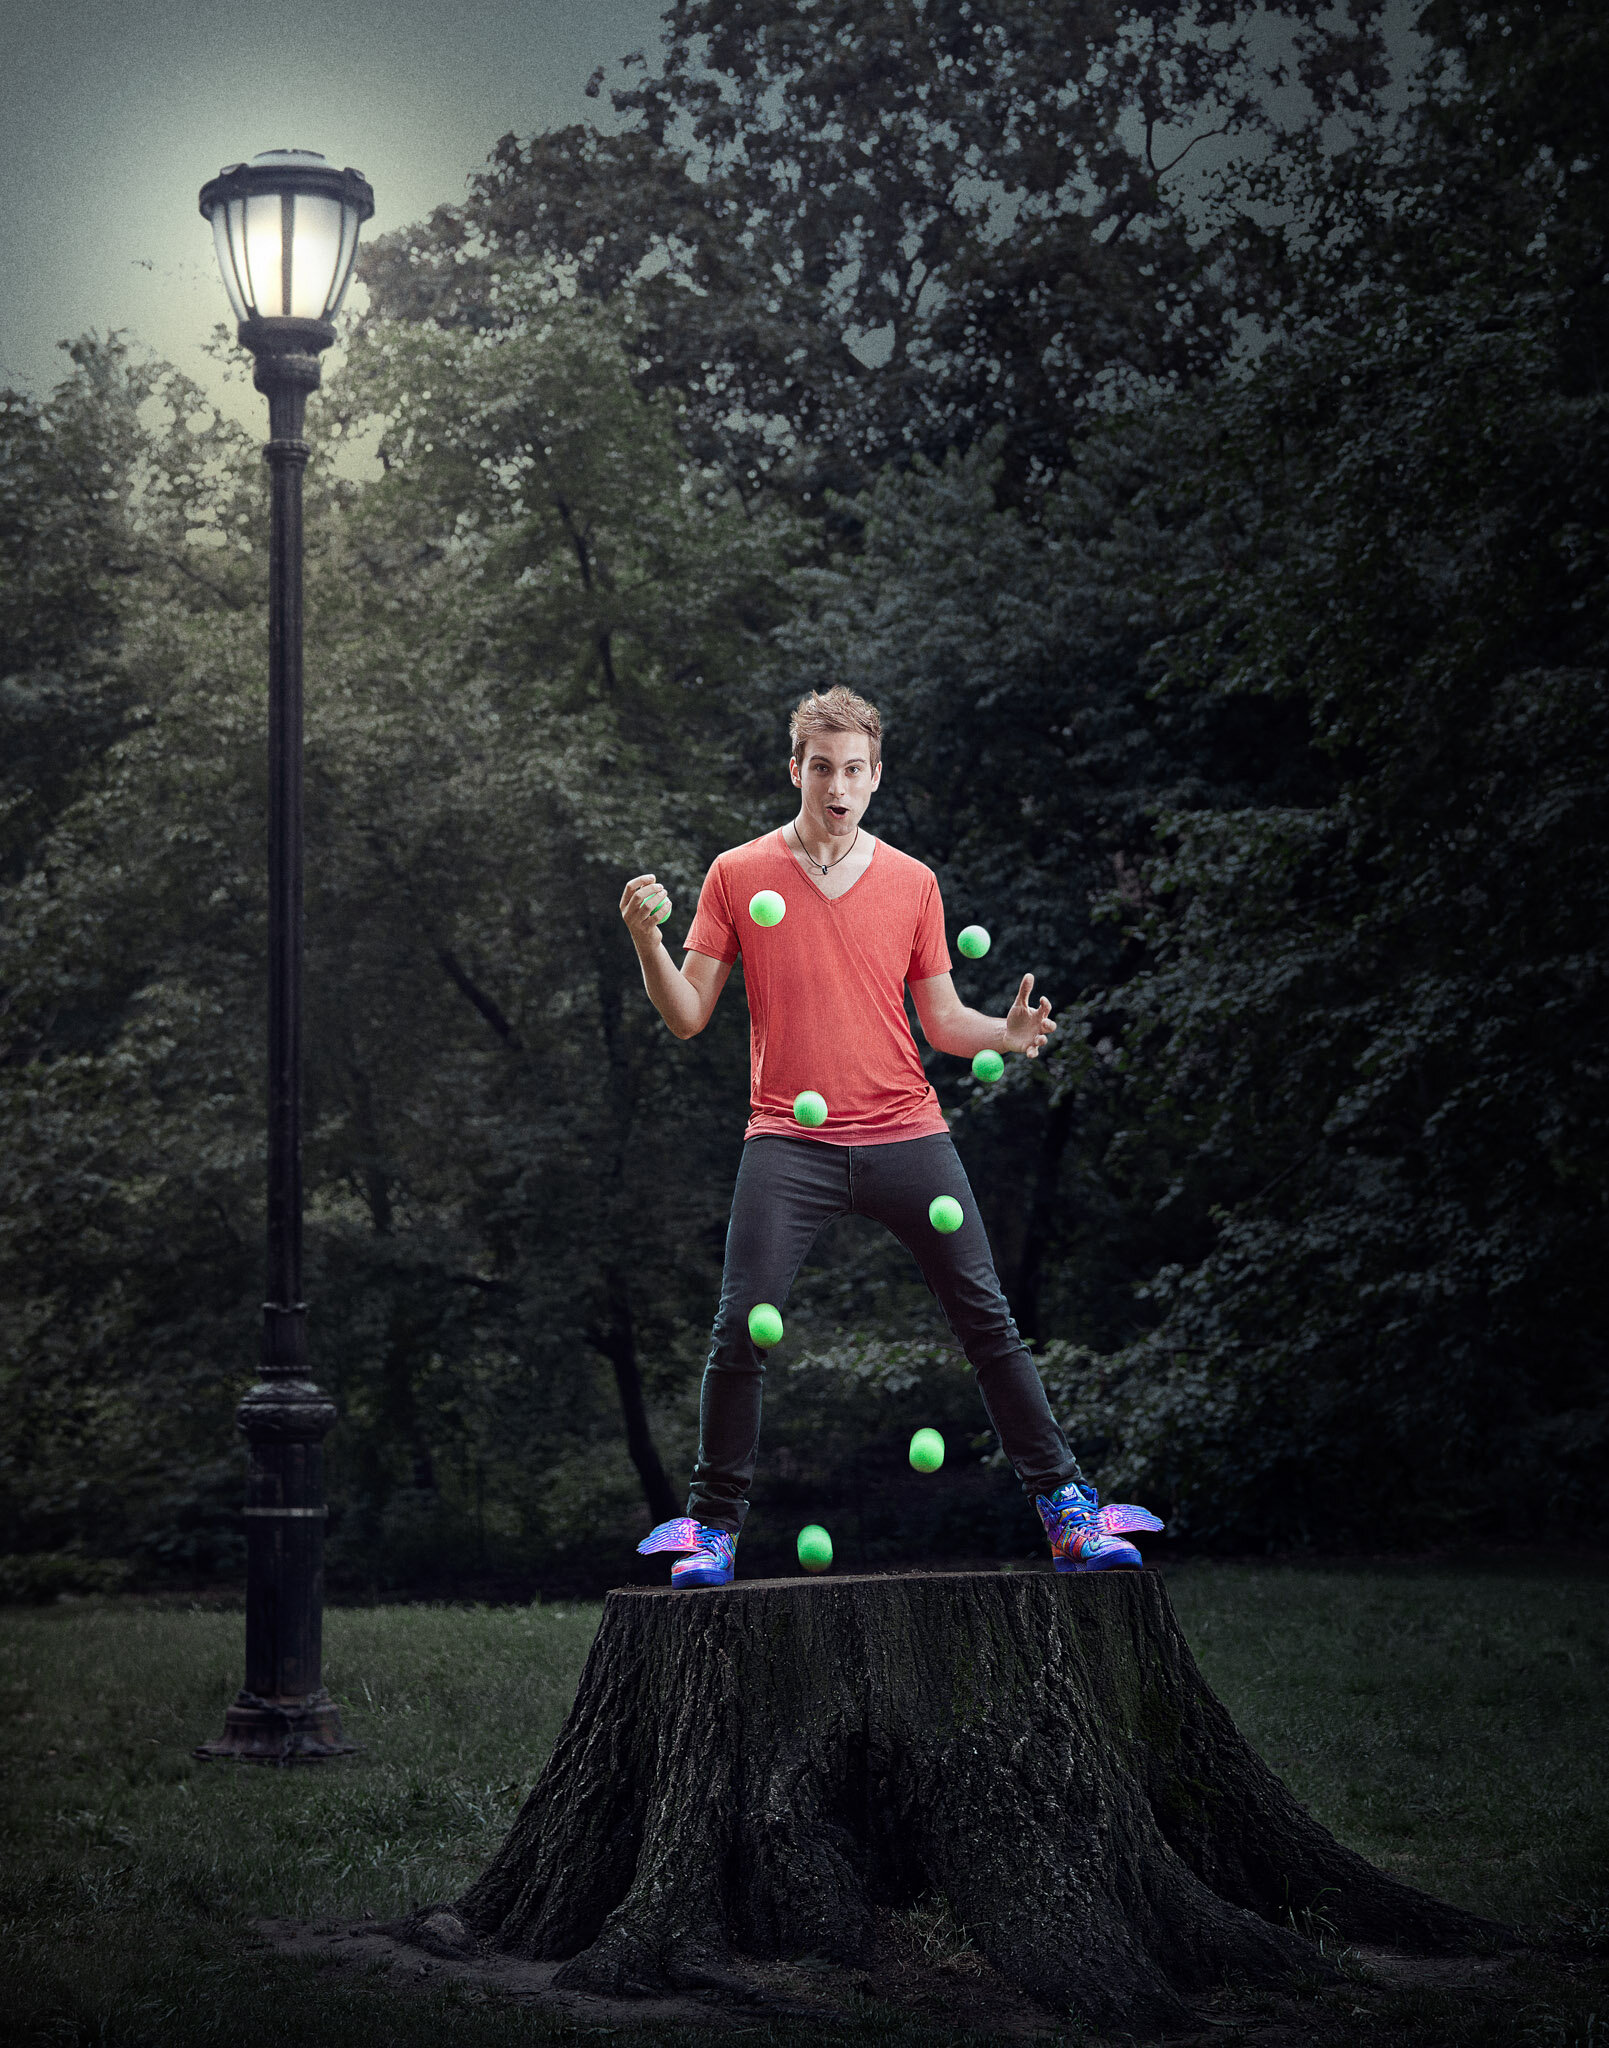 promo photo of juggler Marcus Monroe bounce juggling on large tree stump in Prospect Park, NY portrait photographer Hanna Agar